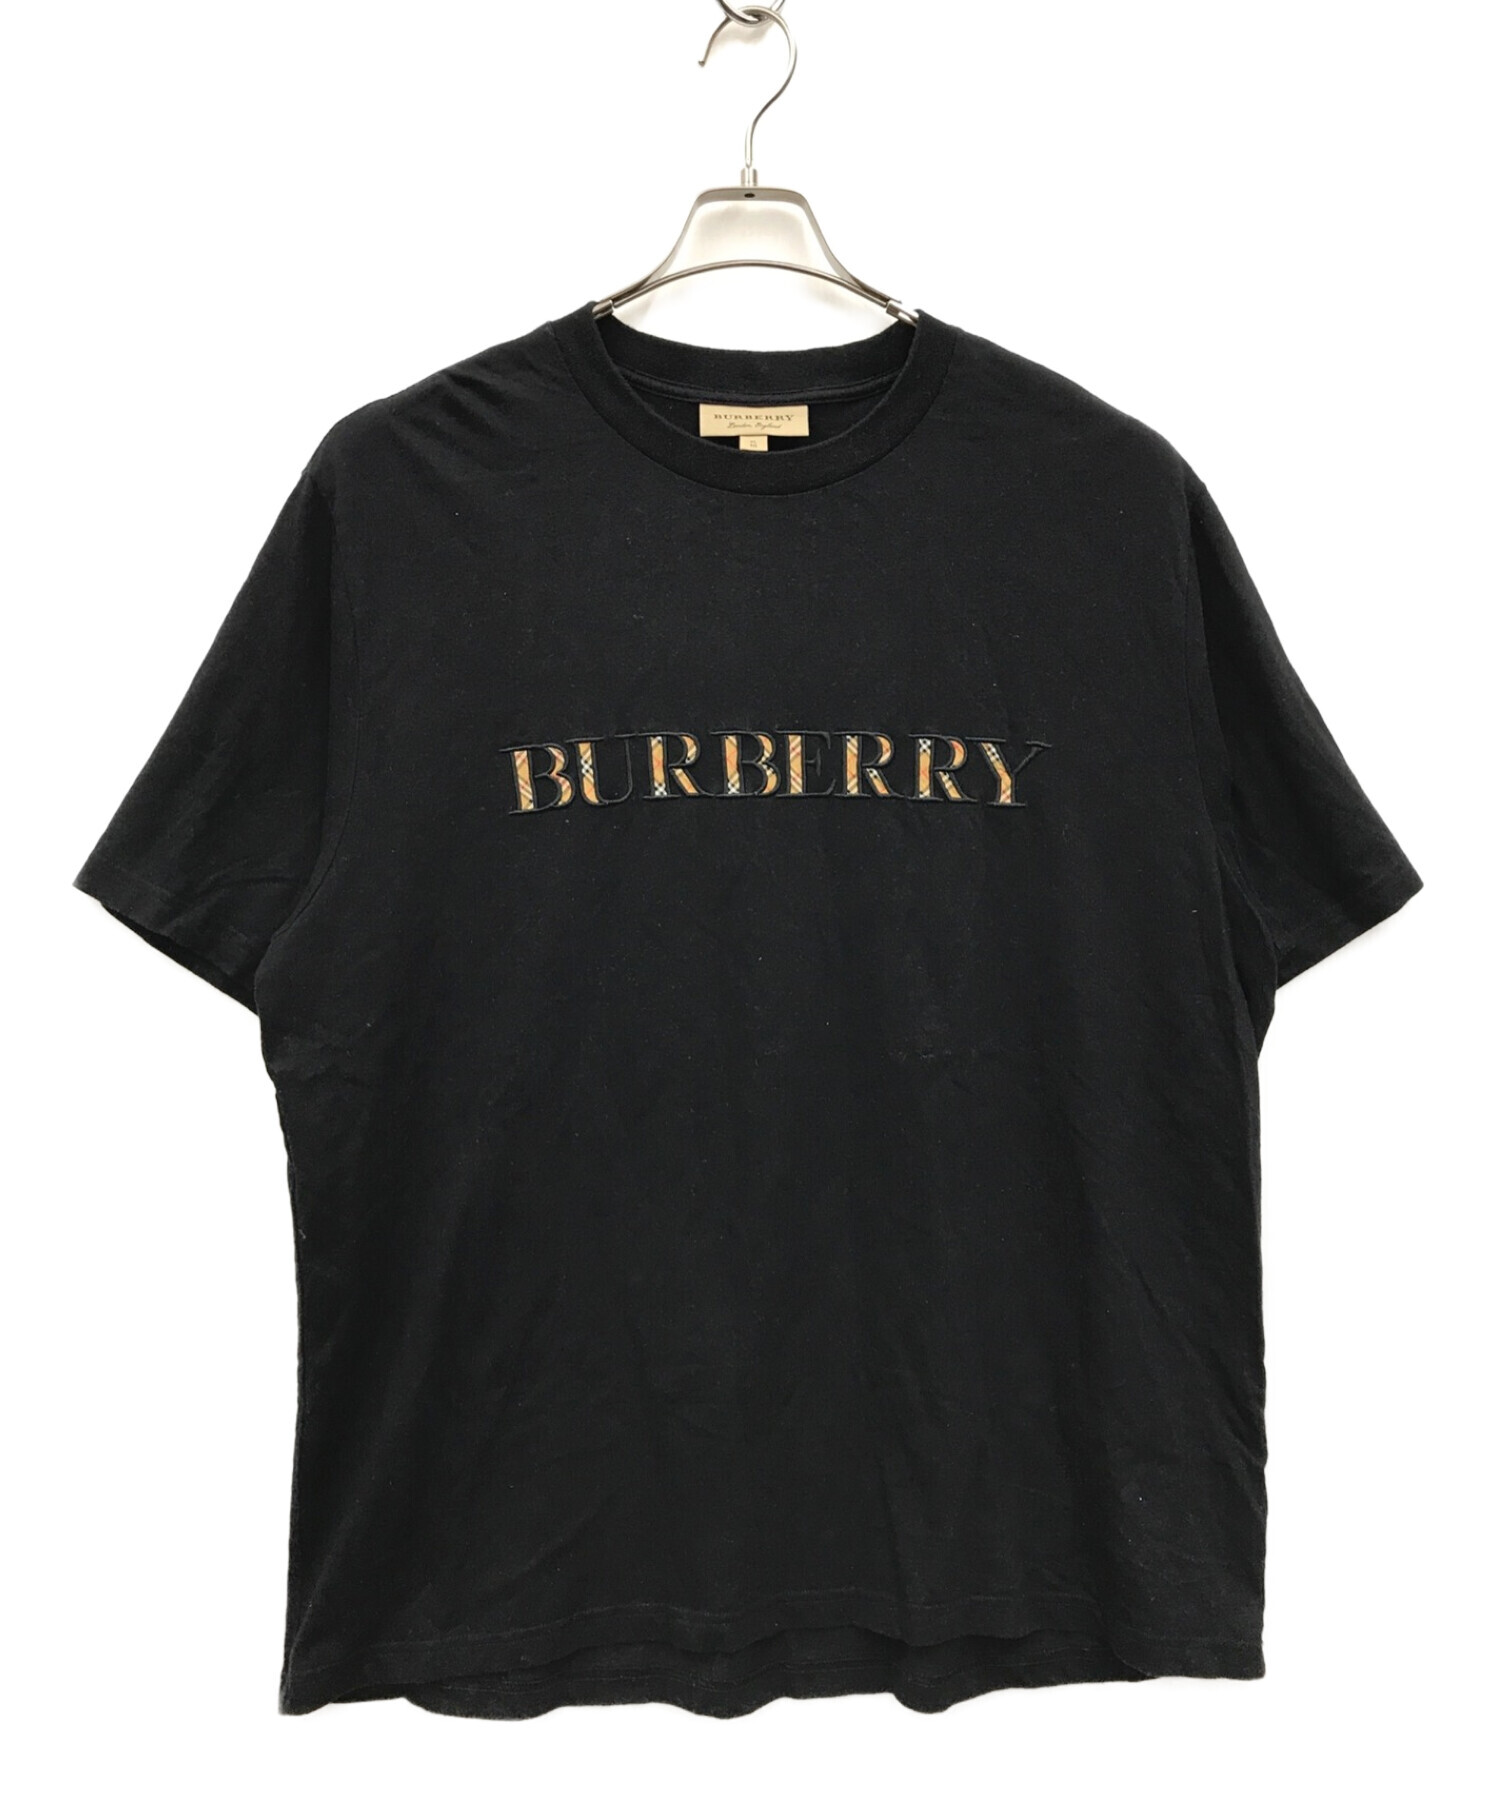 BURBERRY LONDON (バーバリー ロンドン) ノバチェック柄ロゴ刺繍Tシャツ ブラック サイズ:XL